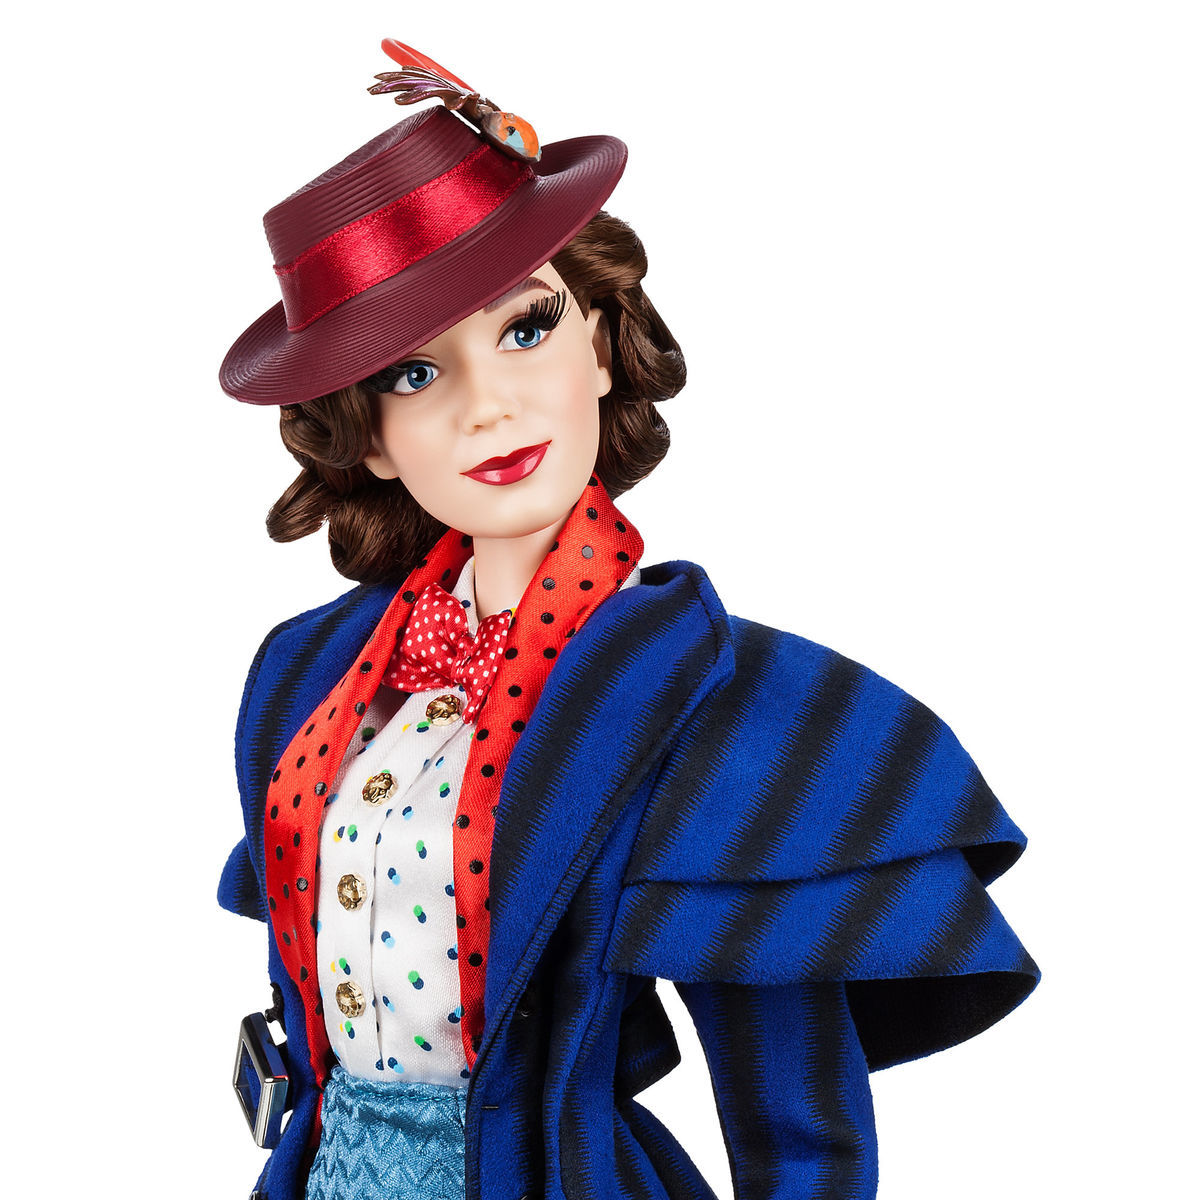 disney mary poppins returns doll